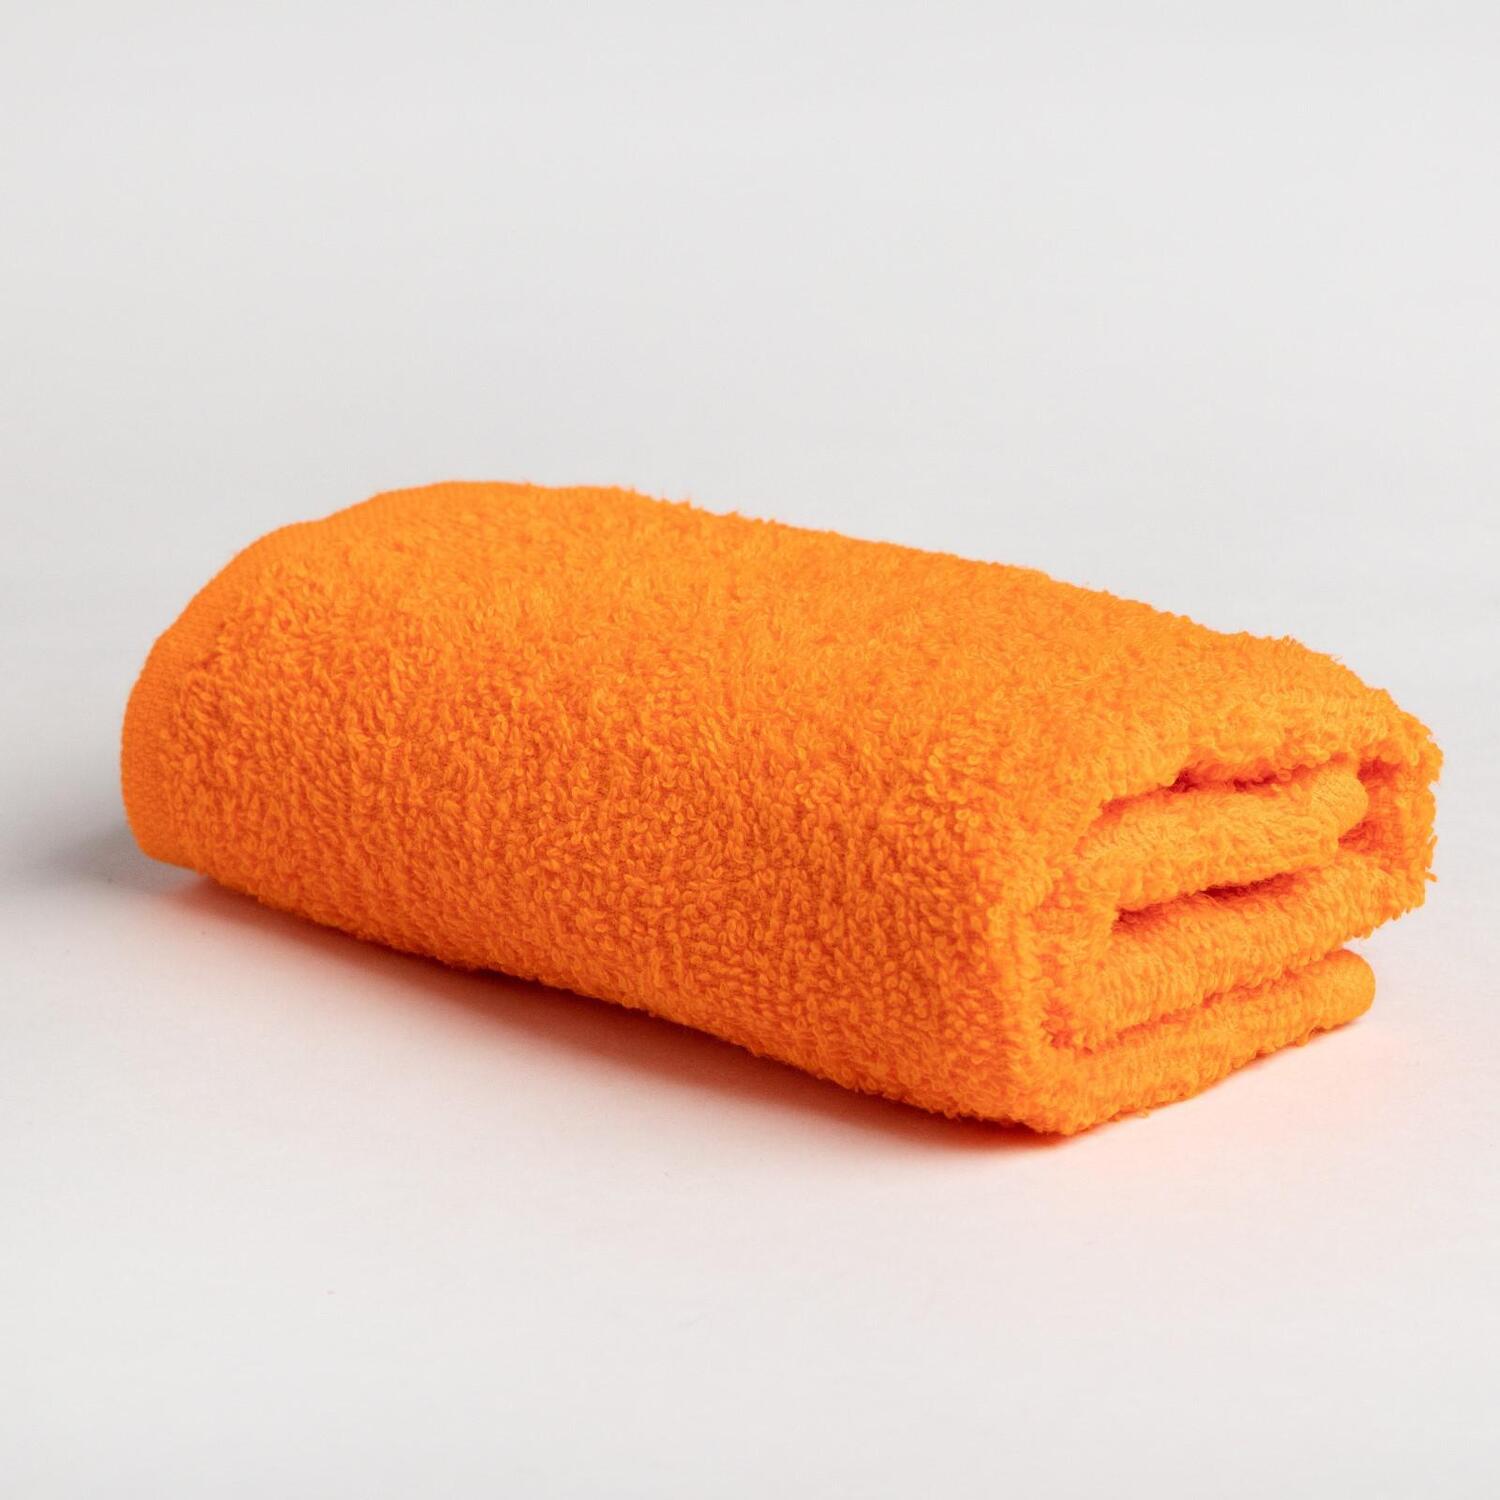 Полотенце Alysdair цвет: оранжевый (30х60 см), размер 30х60 см eiy799564 Полотенце Alysdair цвет: оранжевый (30х60 см) - фото 1